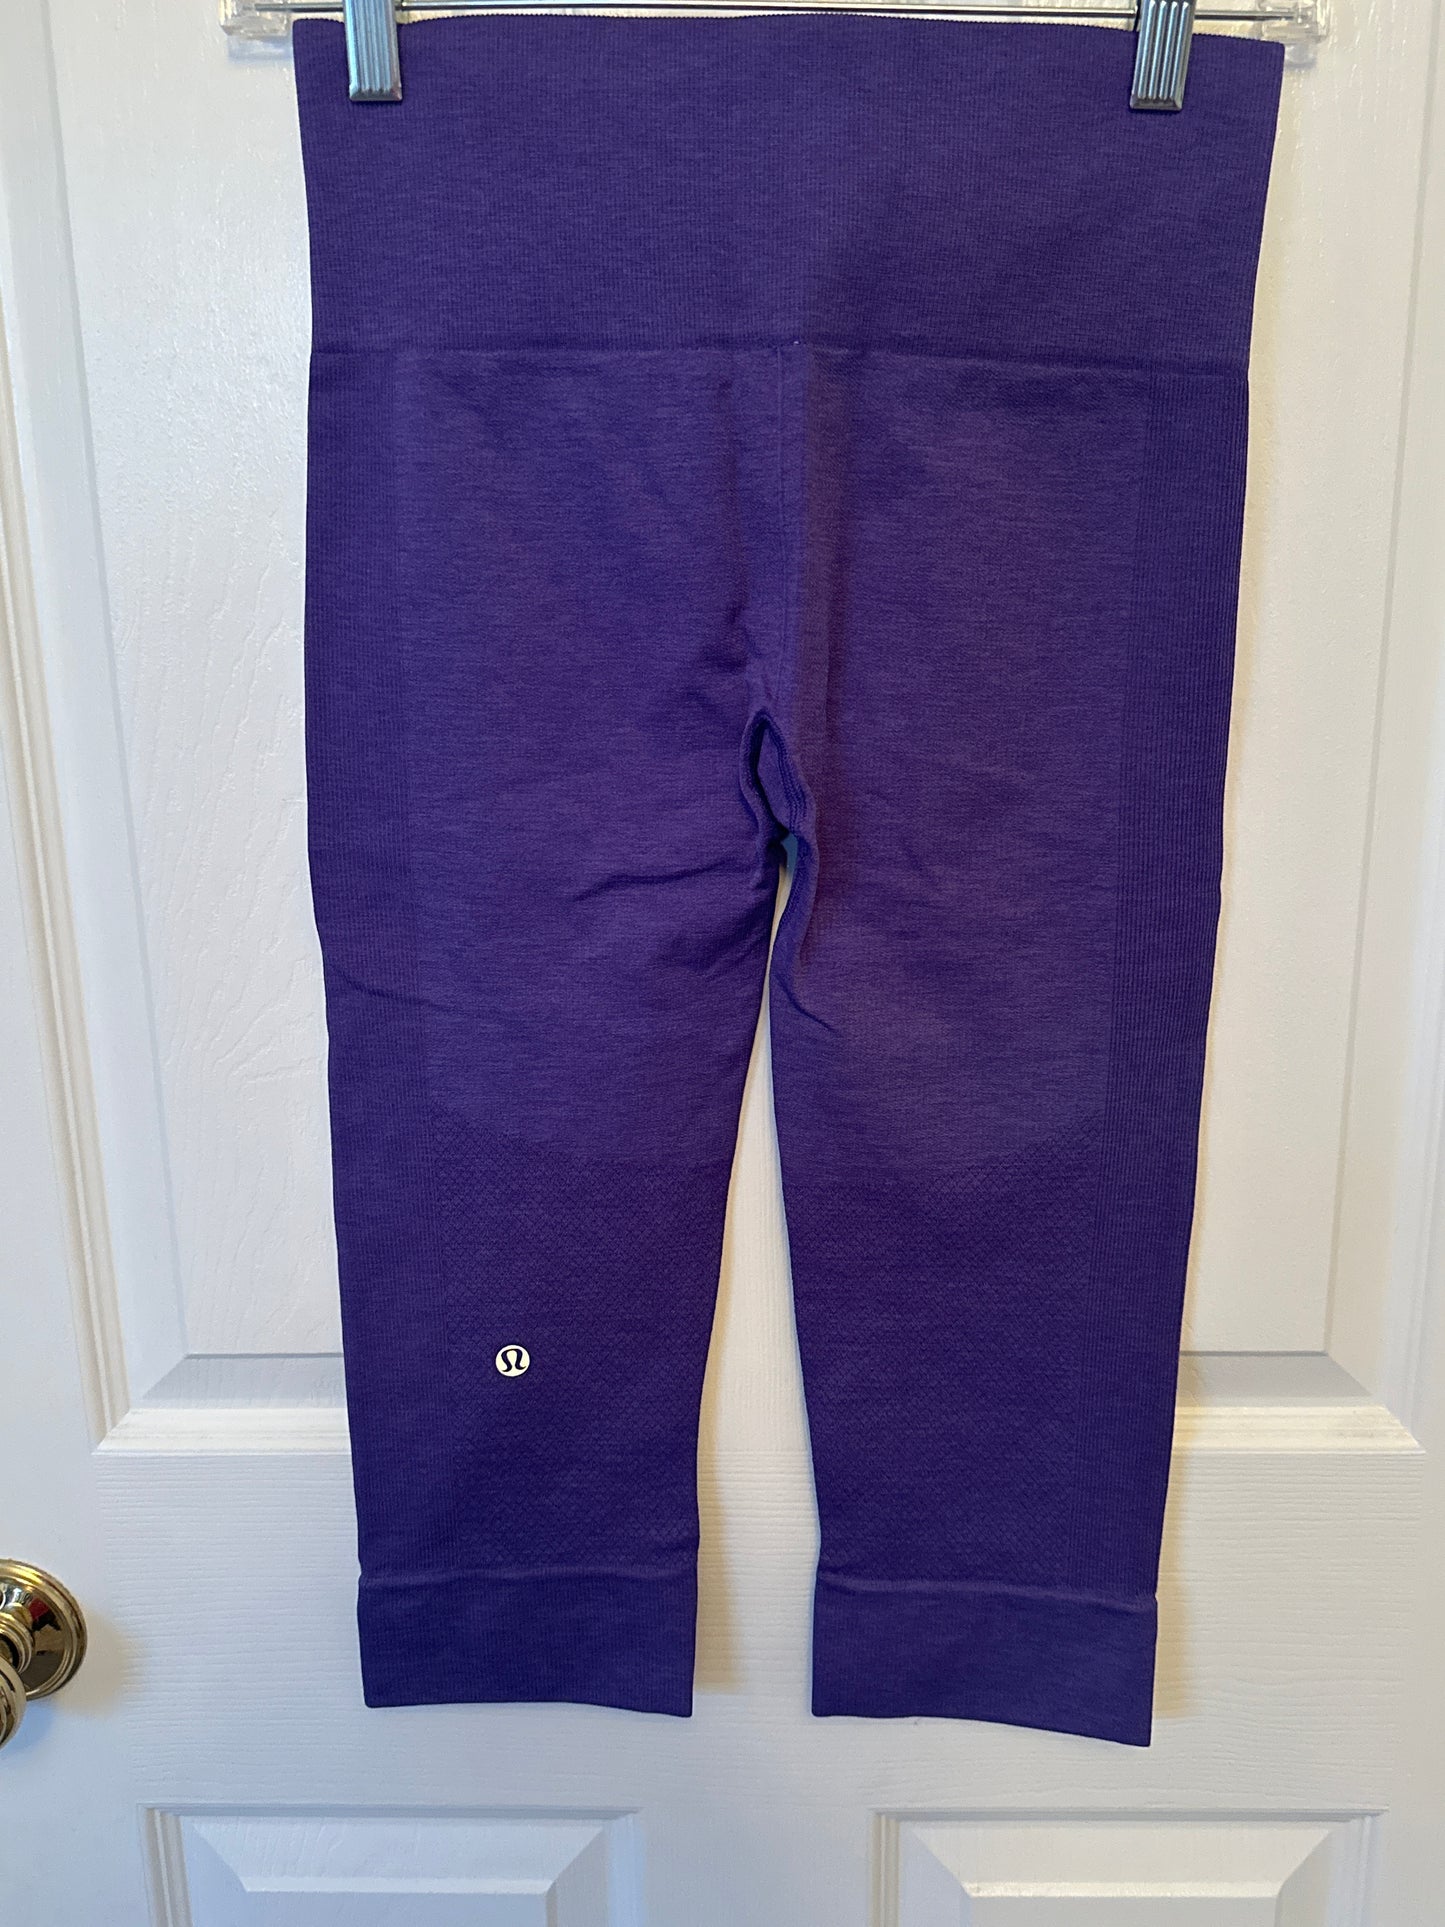 Lululemon Women’s Purple Pants Leggings Sz 4 Cropped Capri